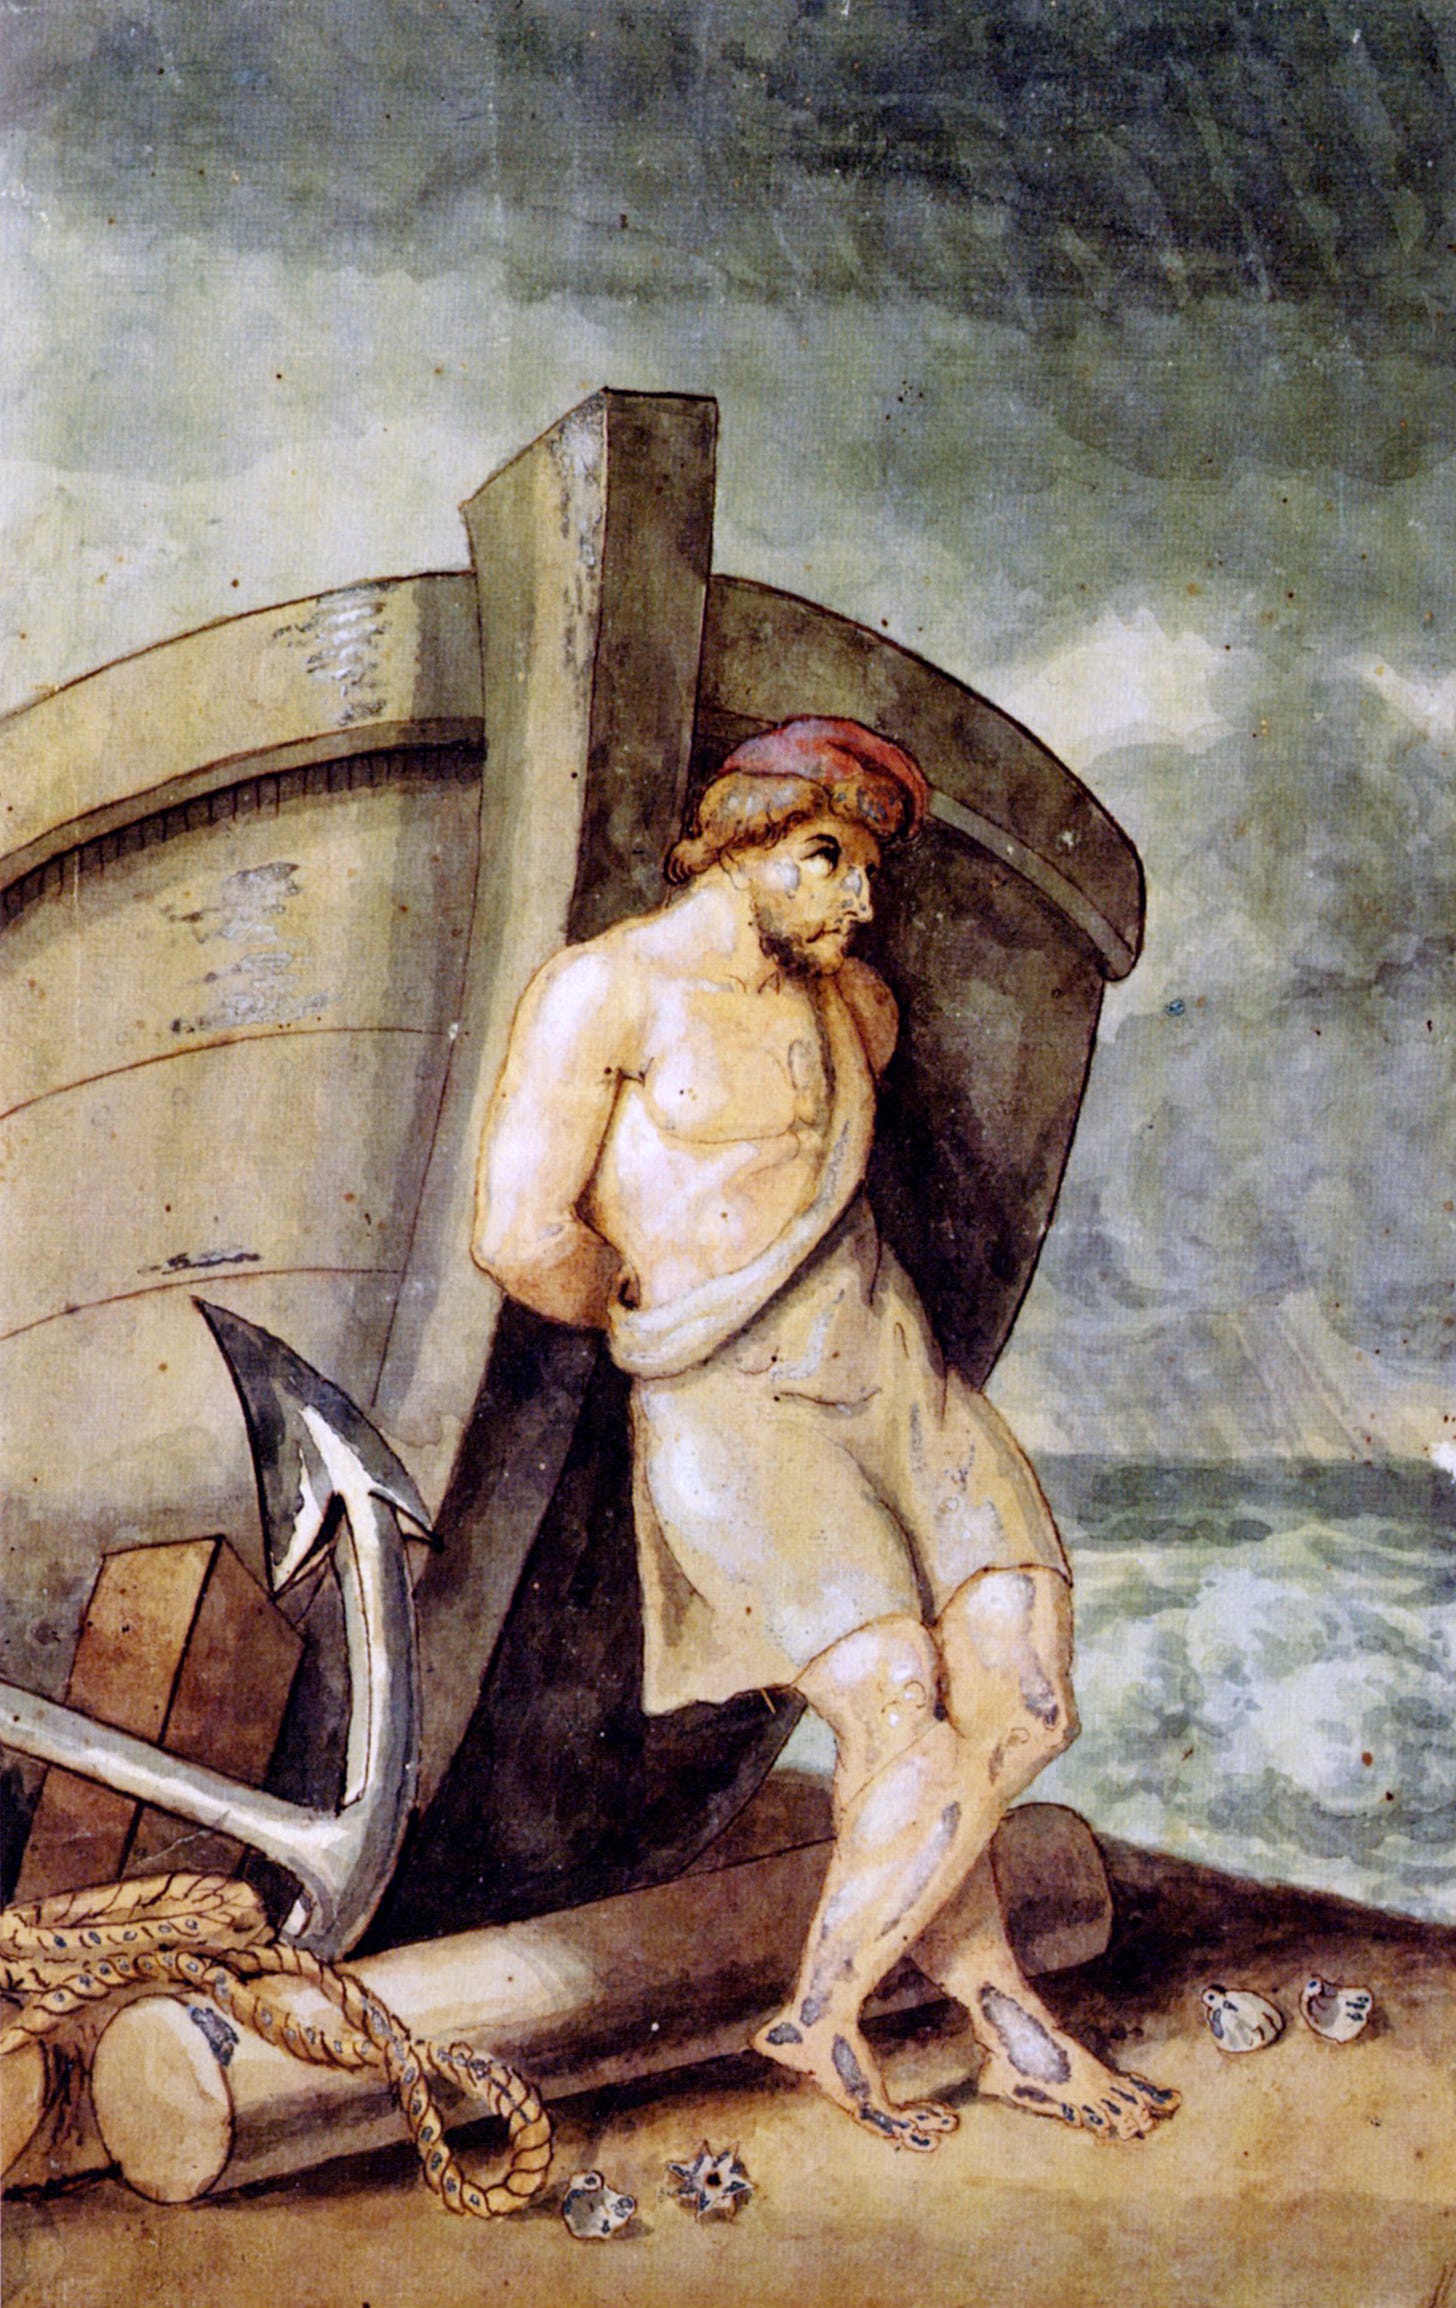 File:Odysseus sehnt sich nach Ithaka (Tischbein).jpg - Wikimedia Commons